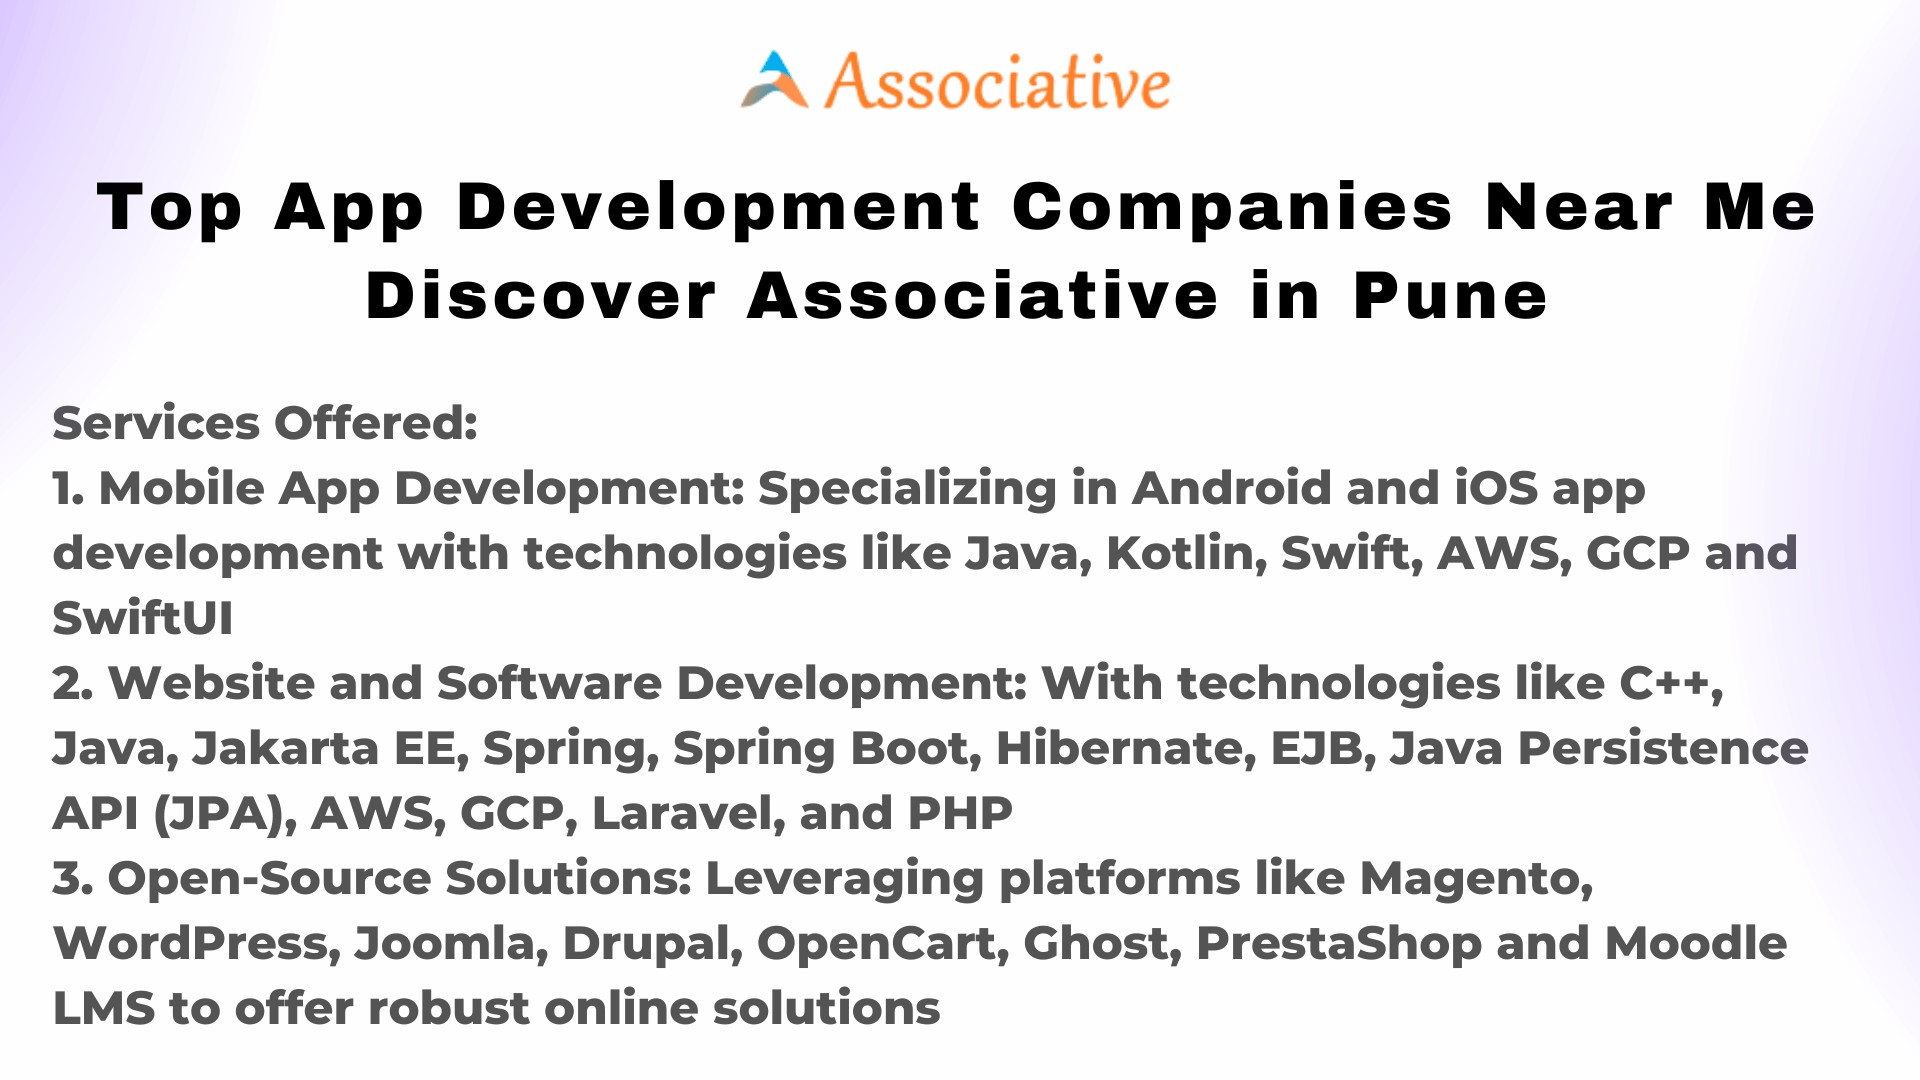 Top App Development Companies Near Me Discover Associative in Pune